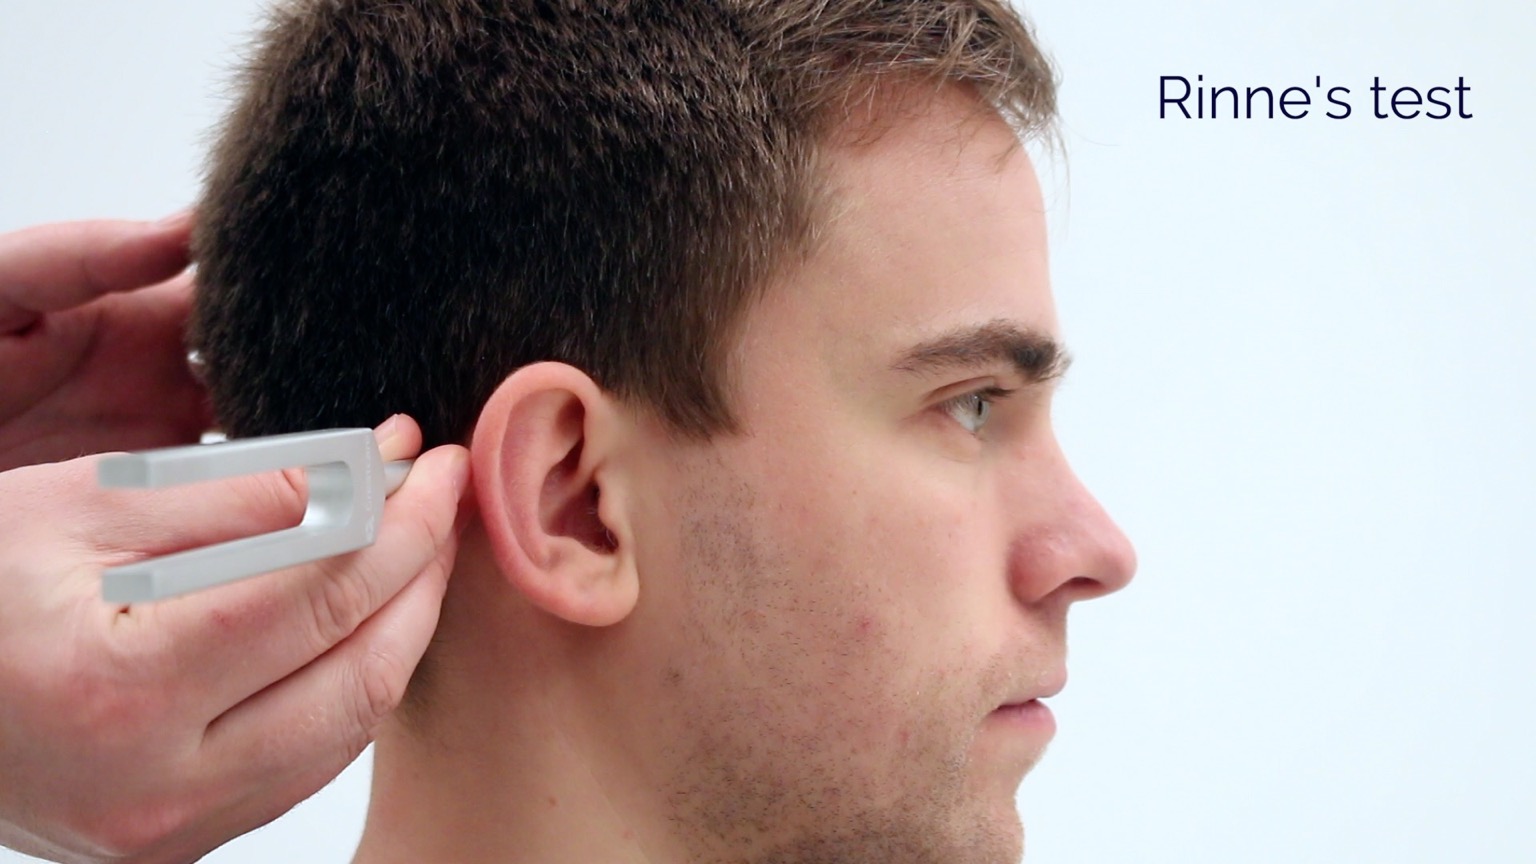 rinne test sensorineural hearing loss